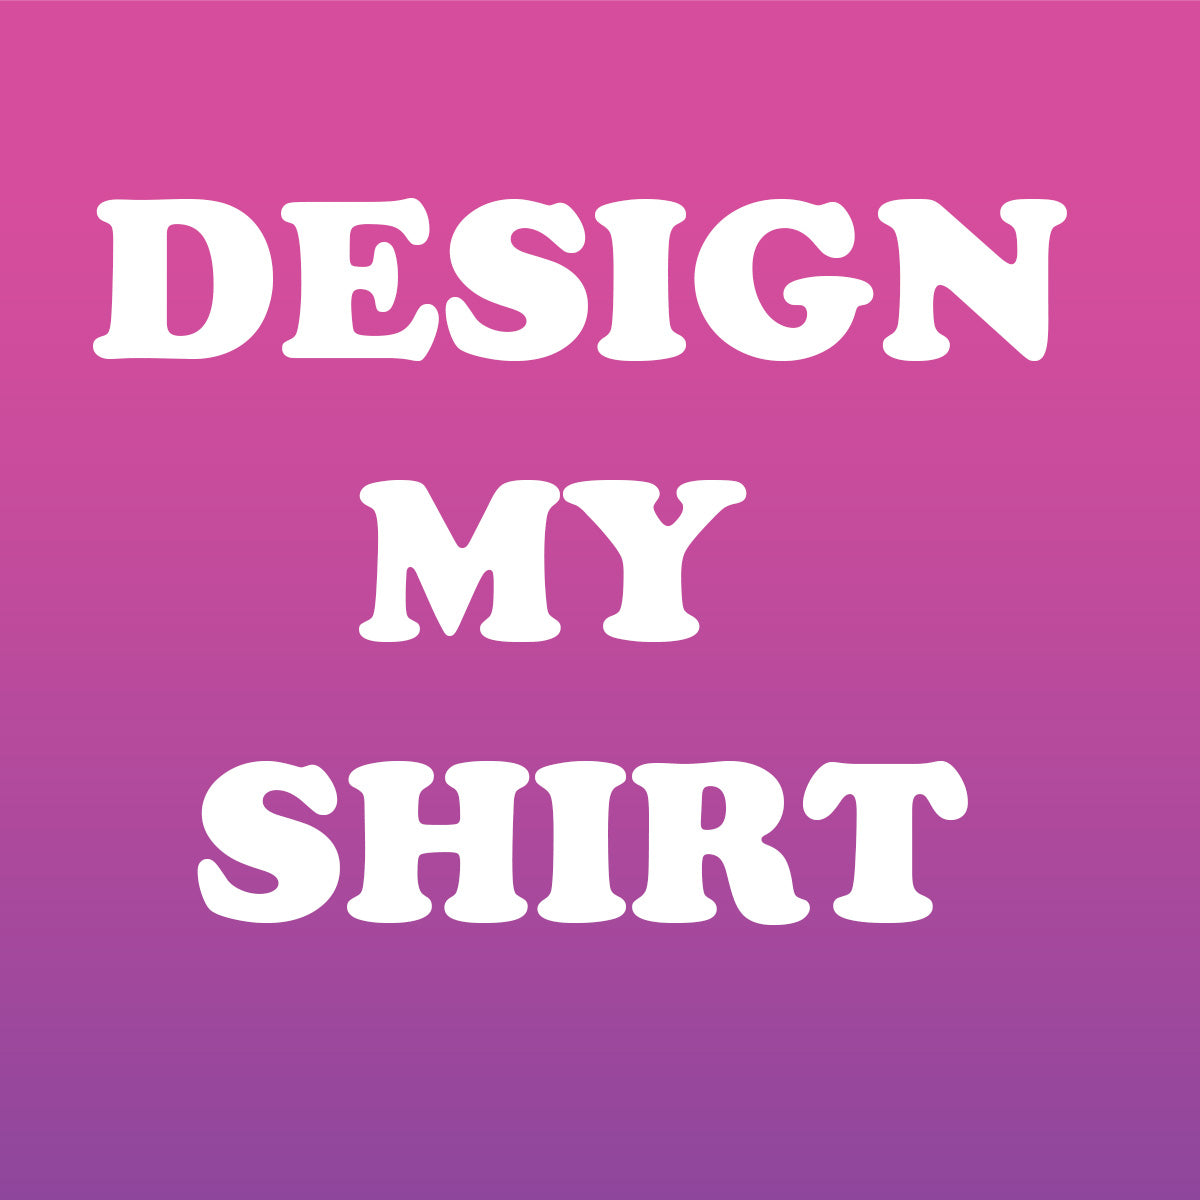 Design a custom t-shirt